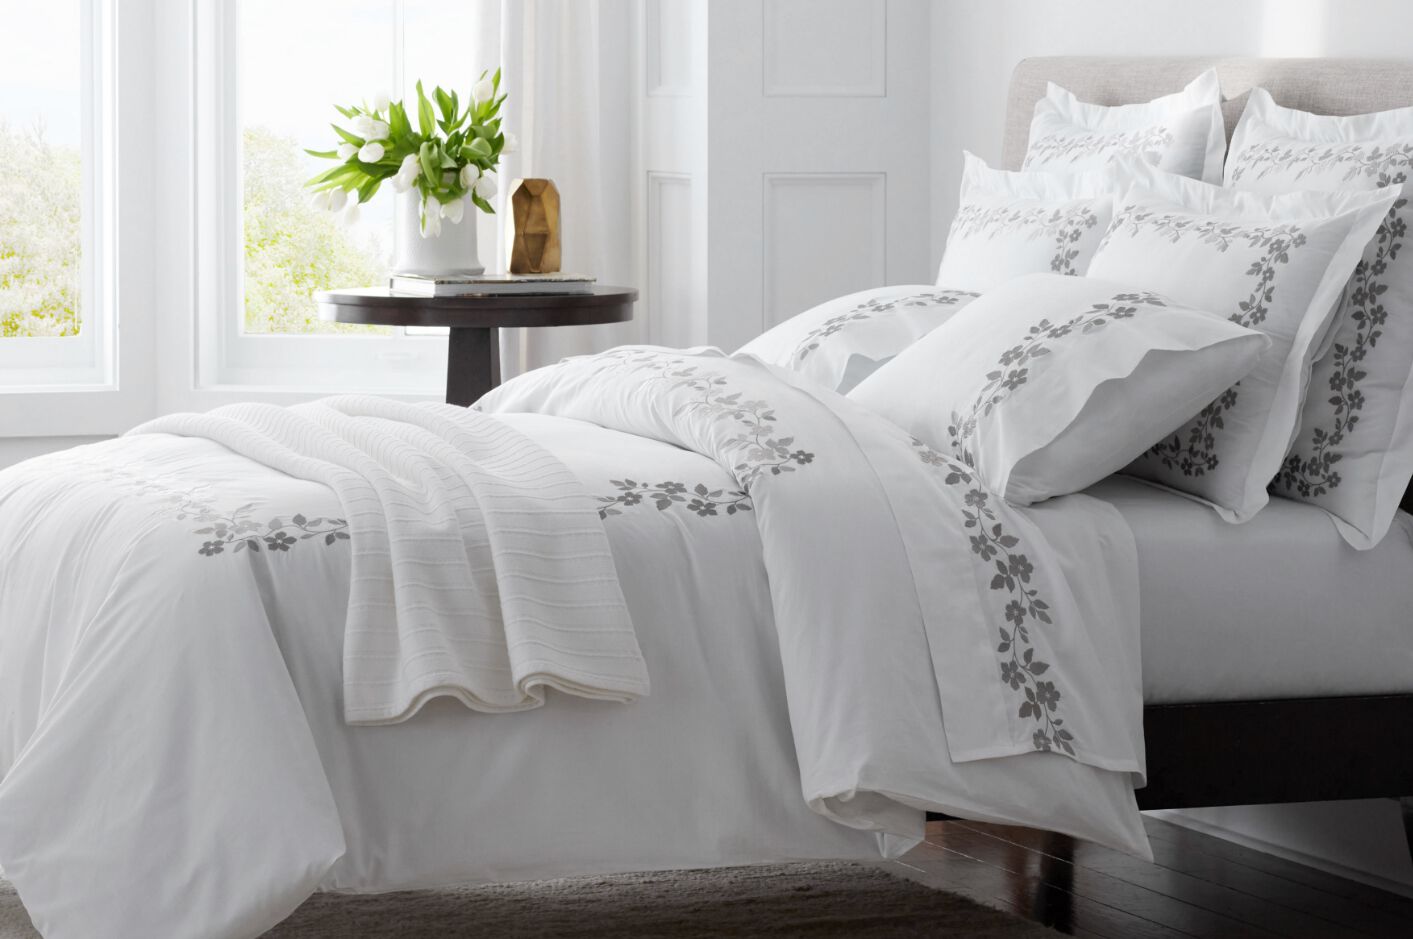 Luxury Bedding, Bath & Home Accents